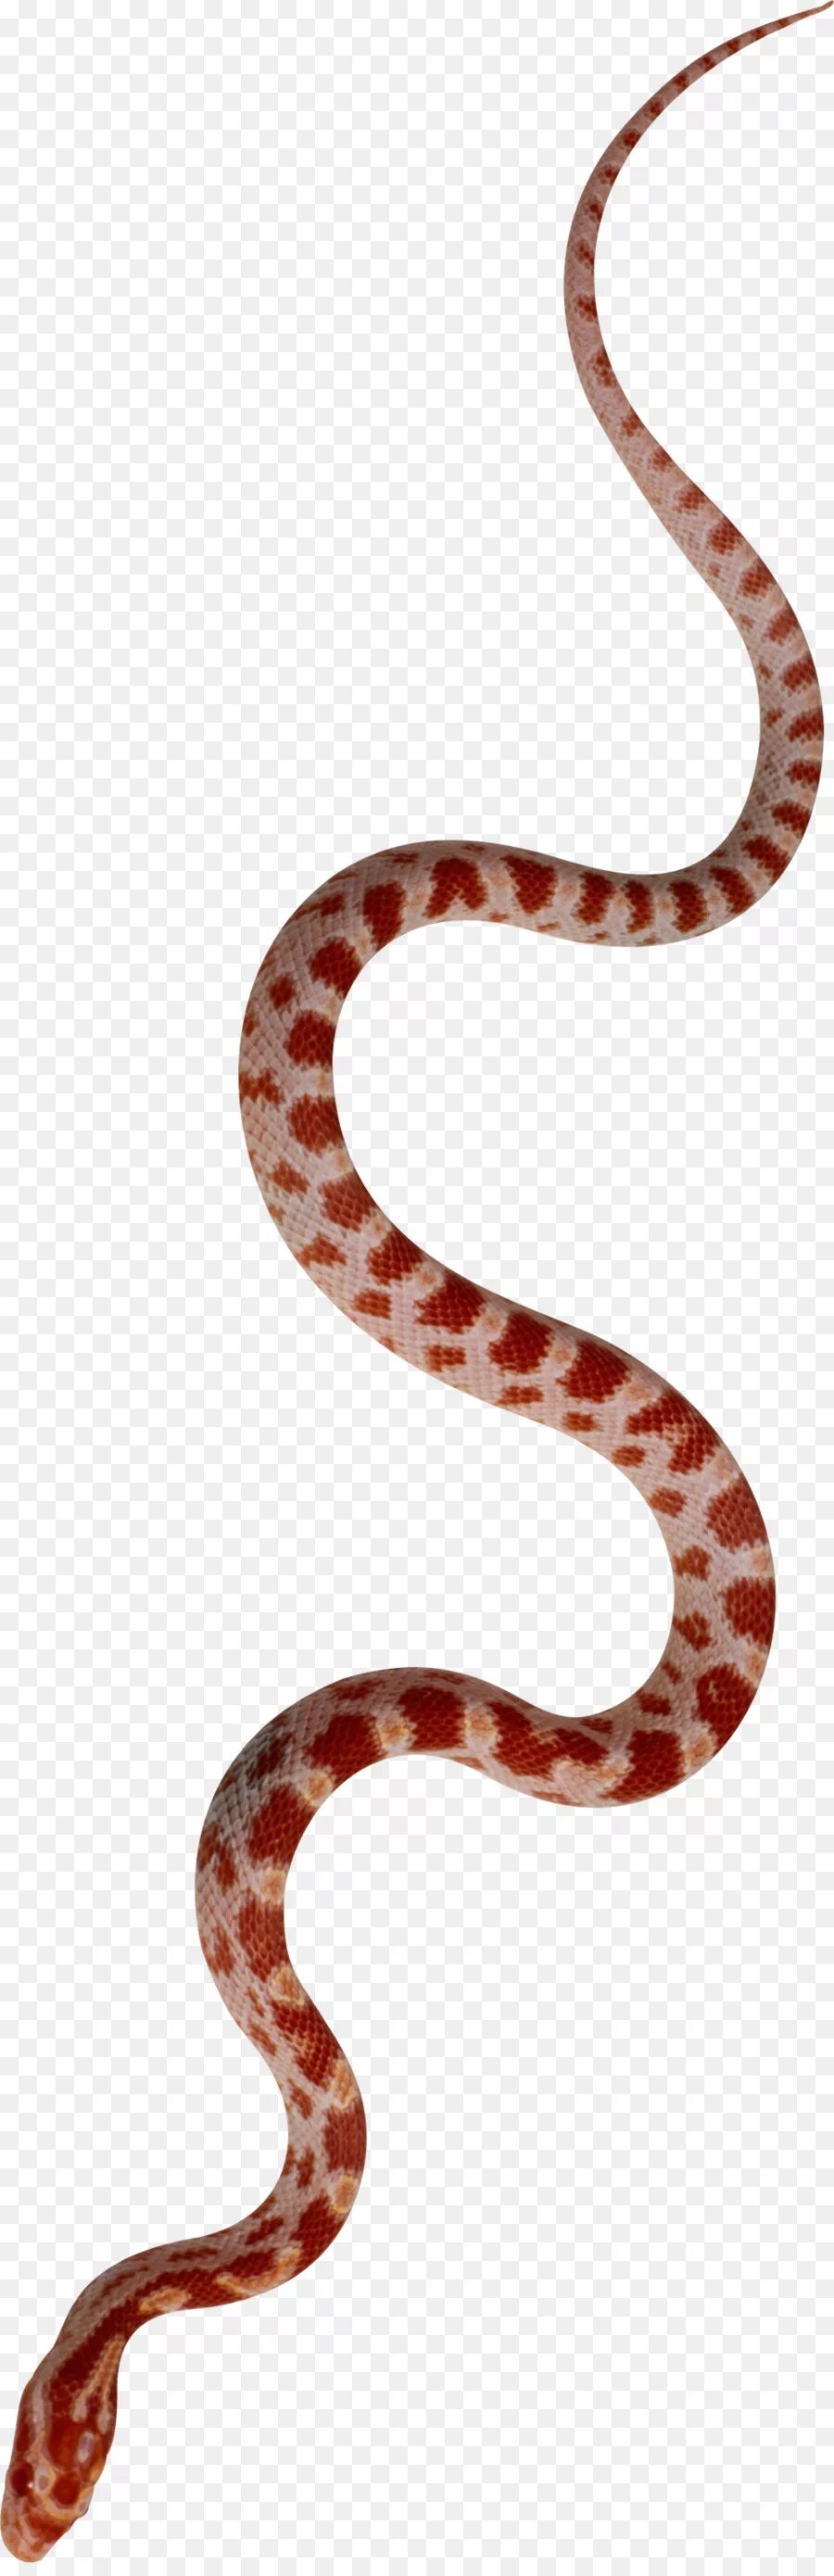 Змейка ползет. Змея ползет. Змея без фона. Змея на прозрачном фоне для фотошопа. Ползучая змея.